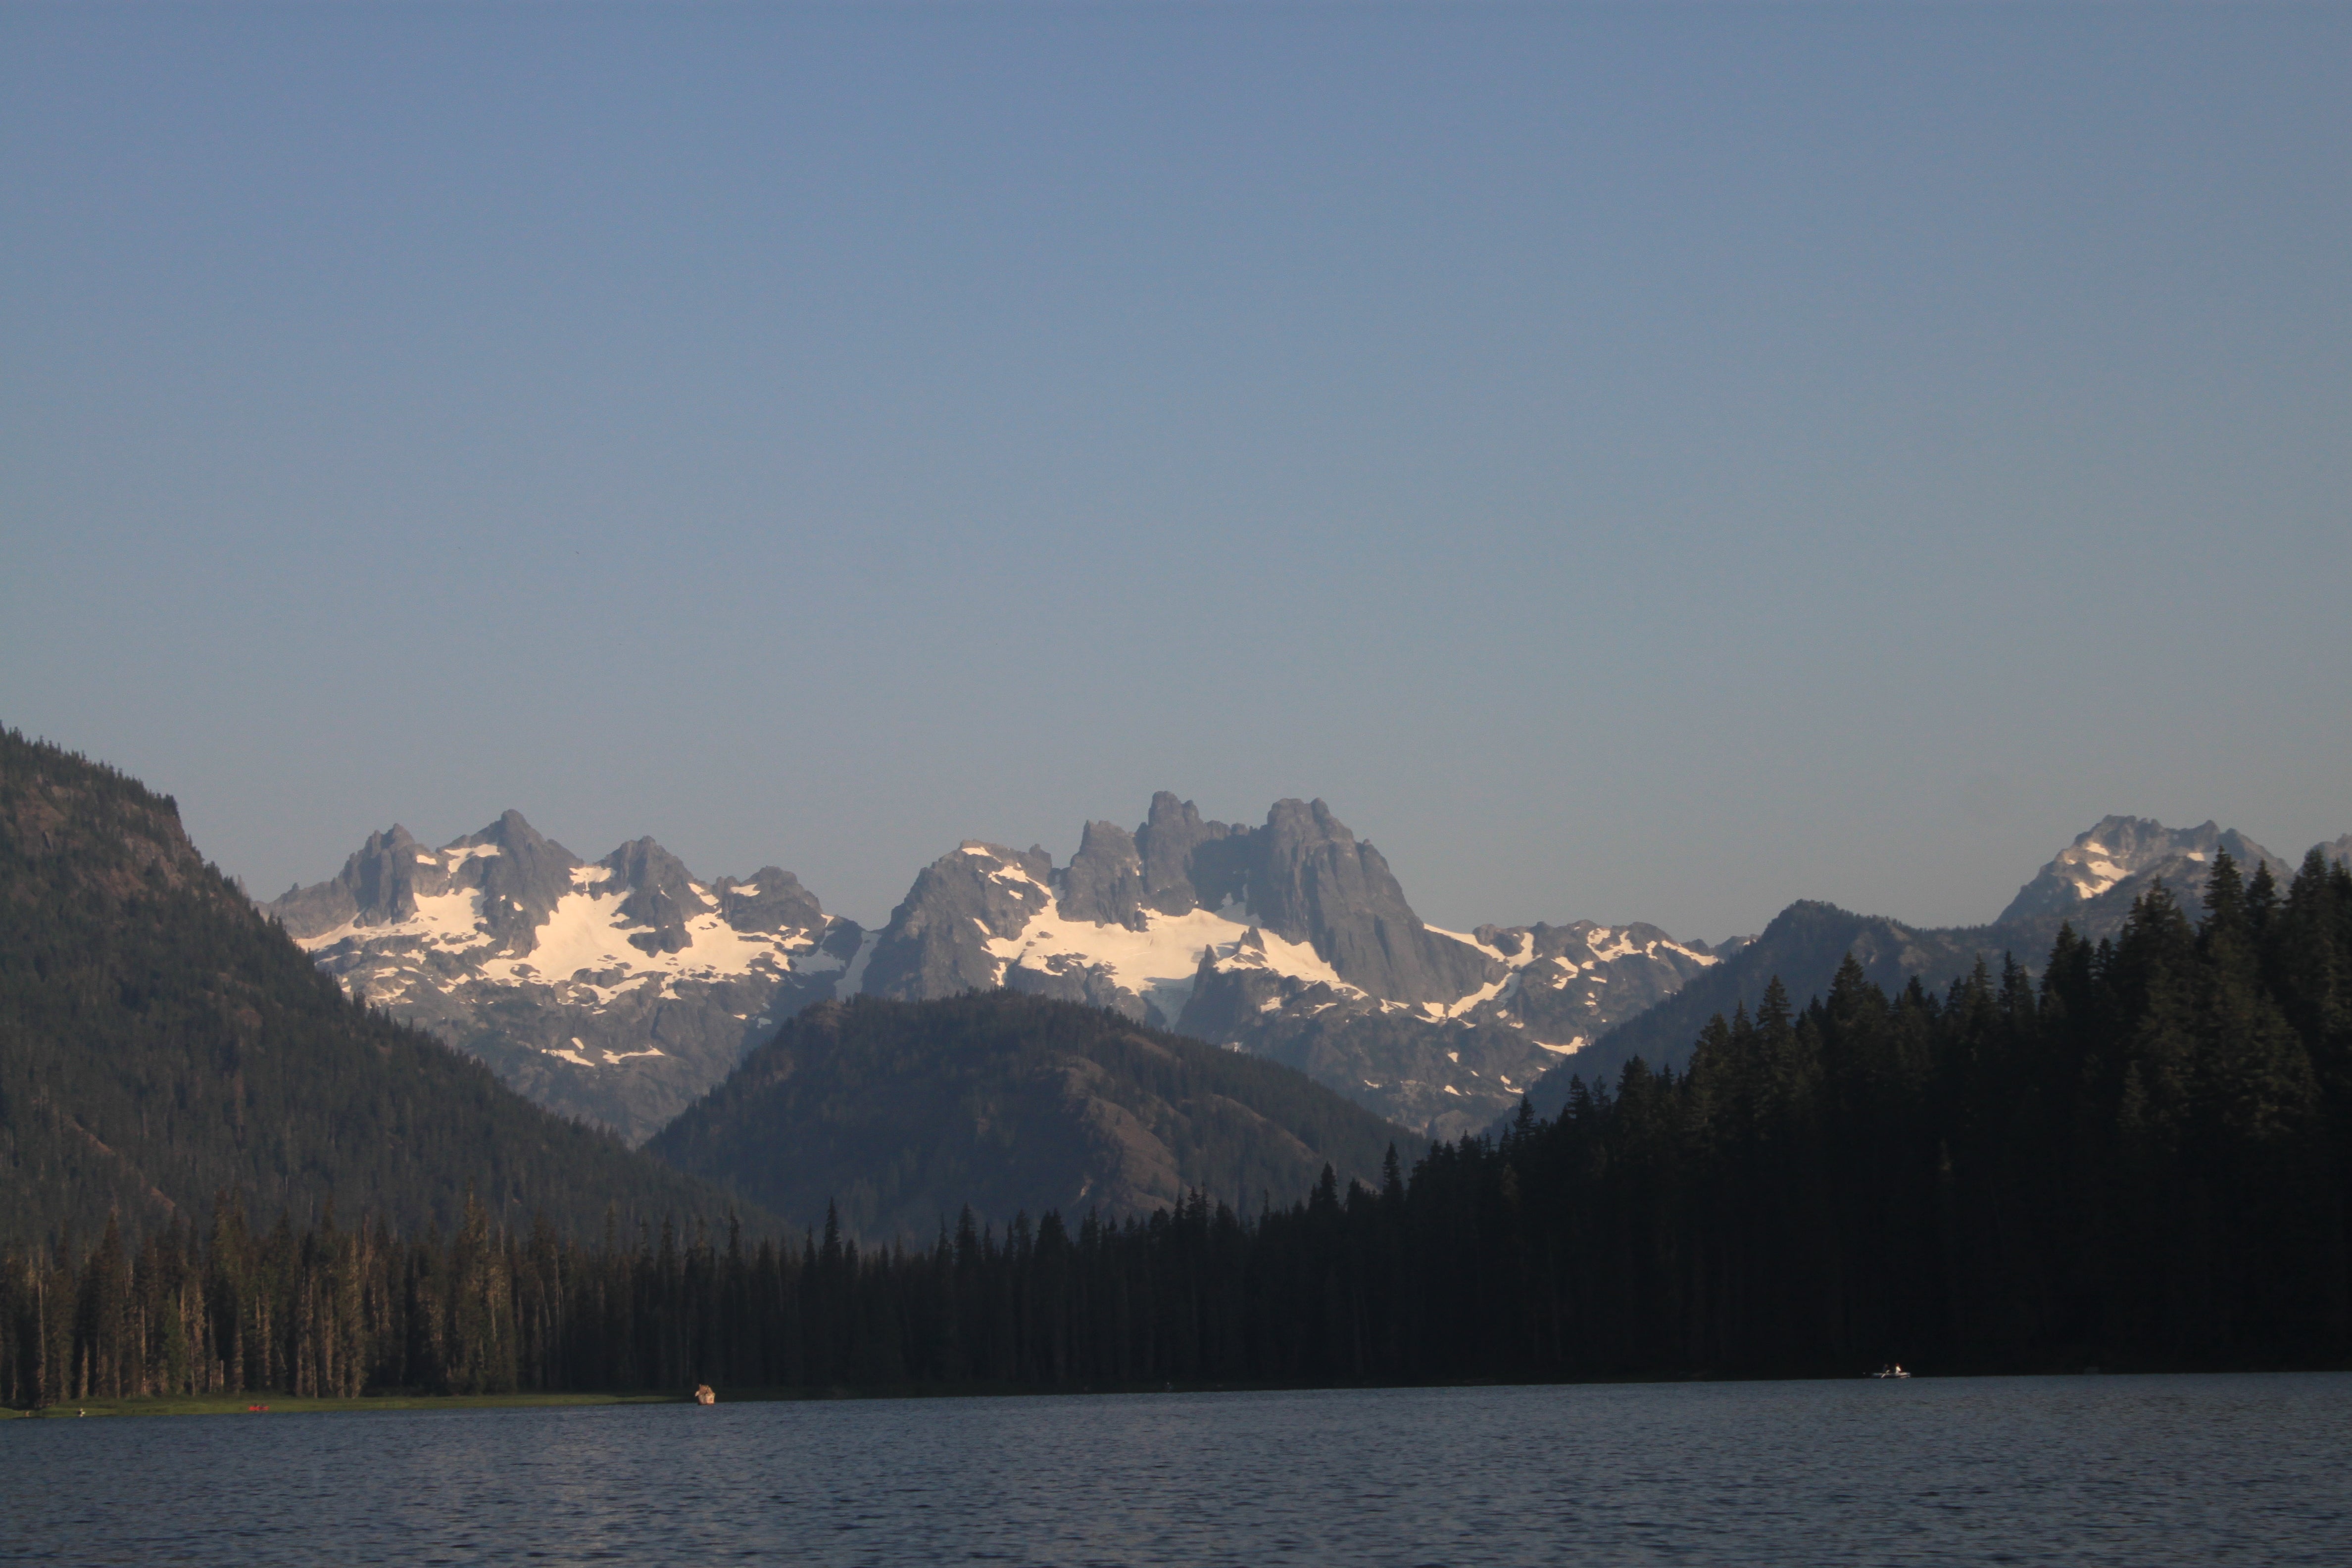 Alpine wilderness looming above Cooper Lake